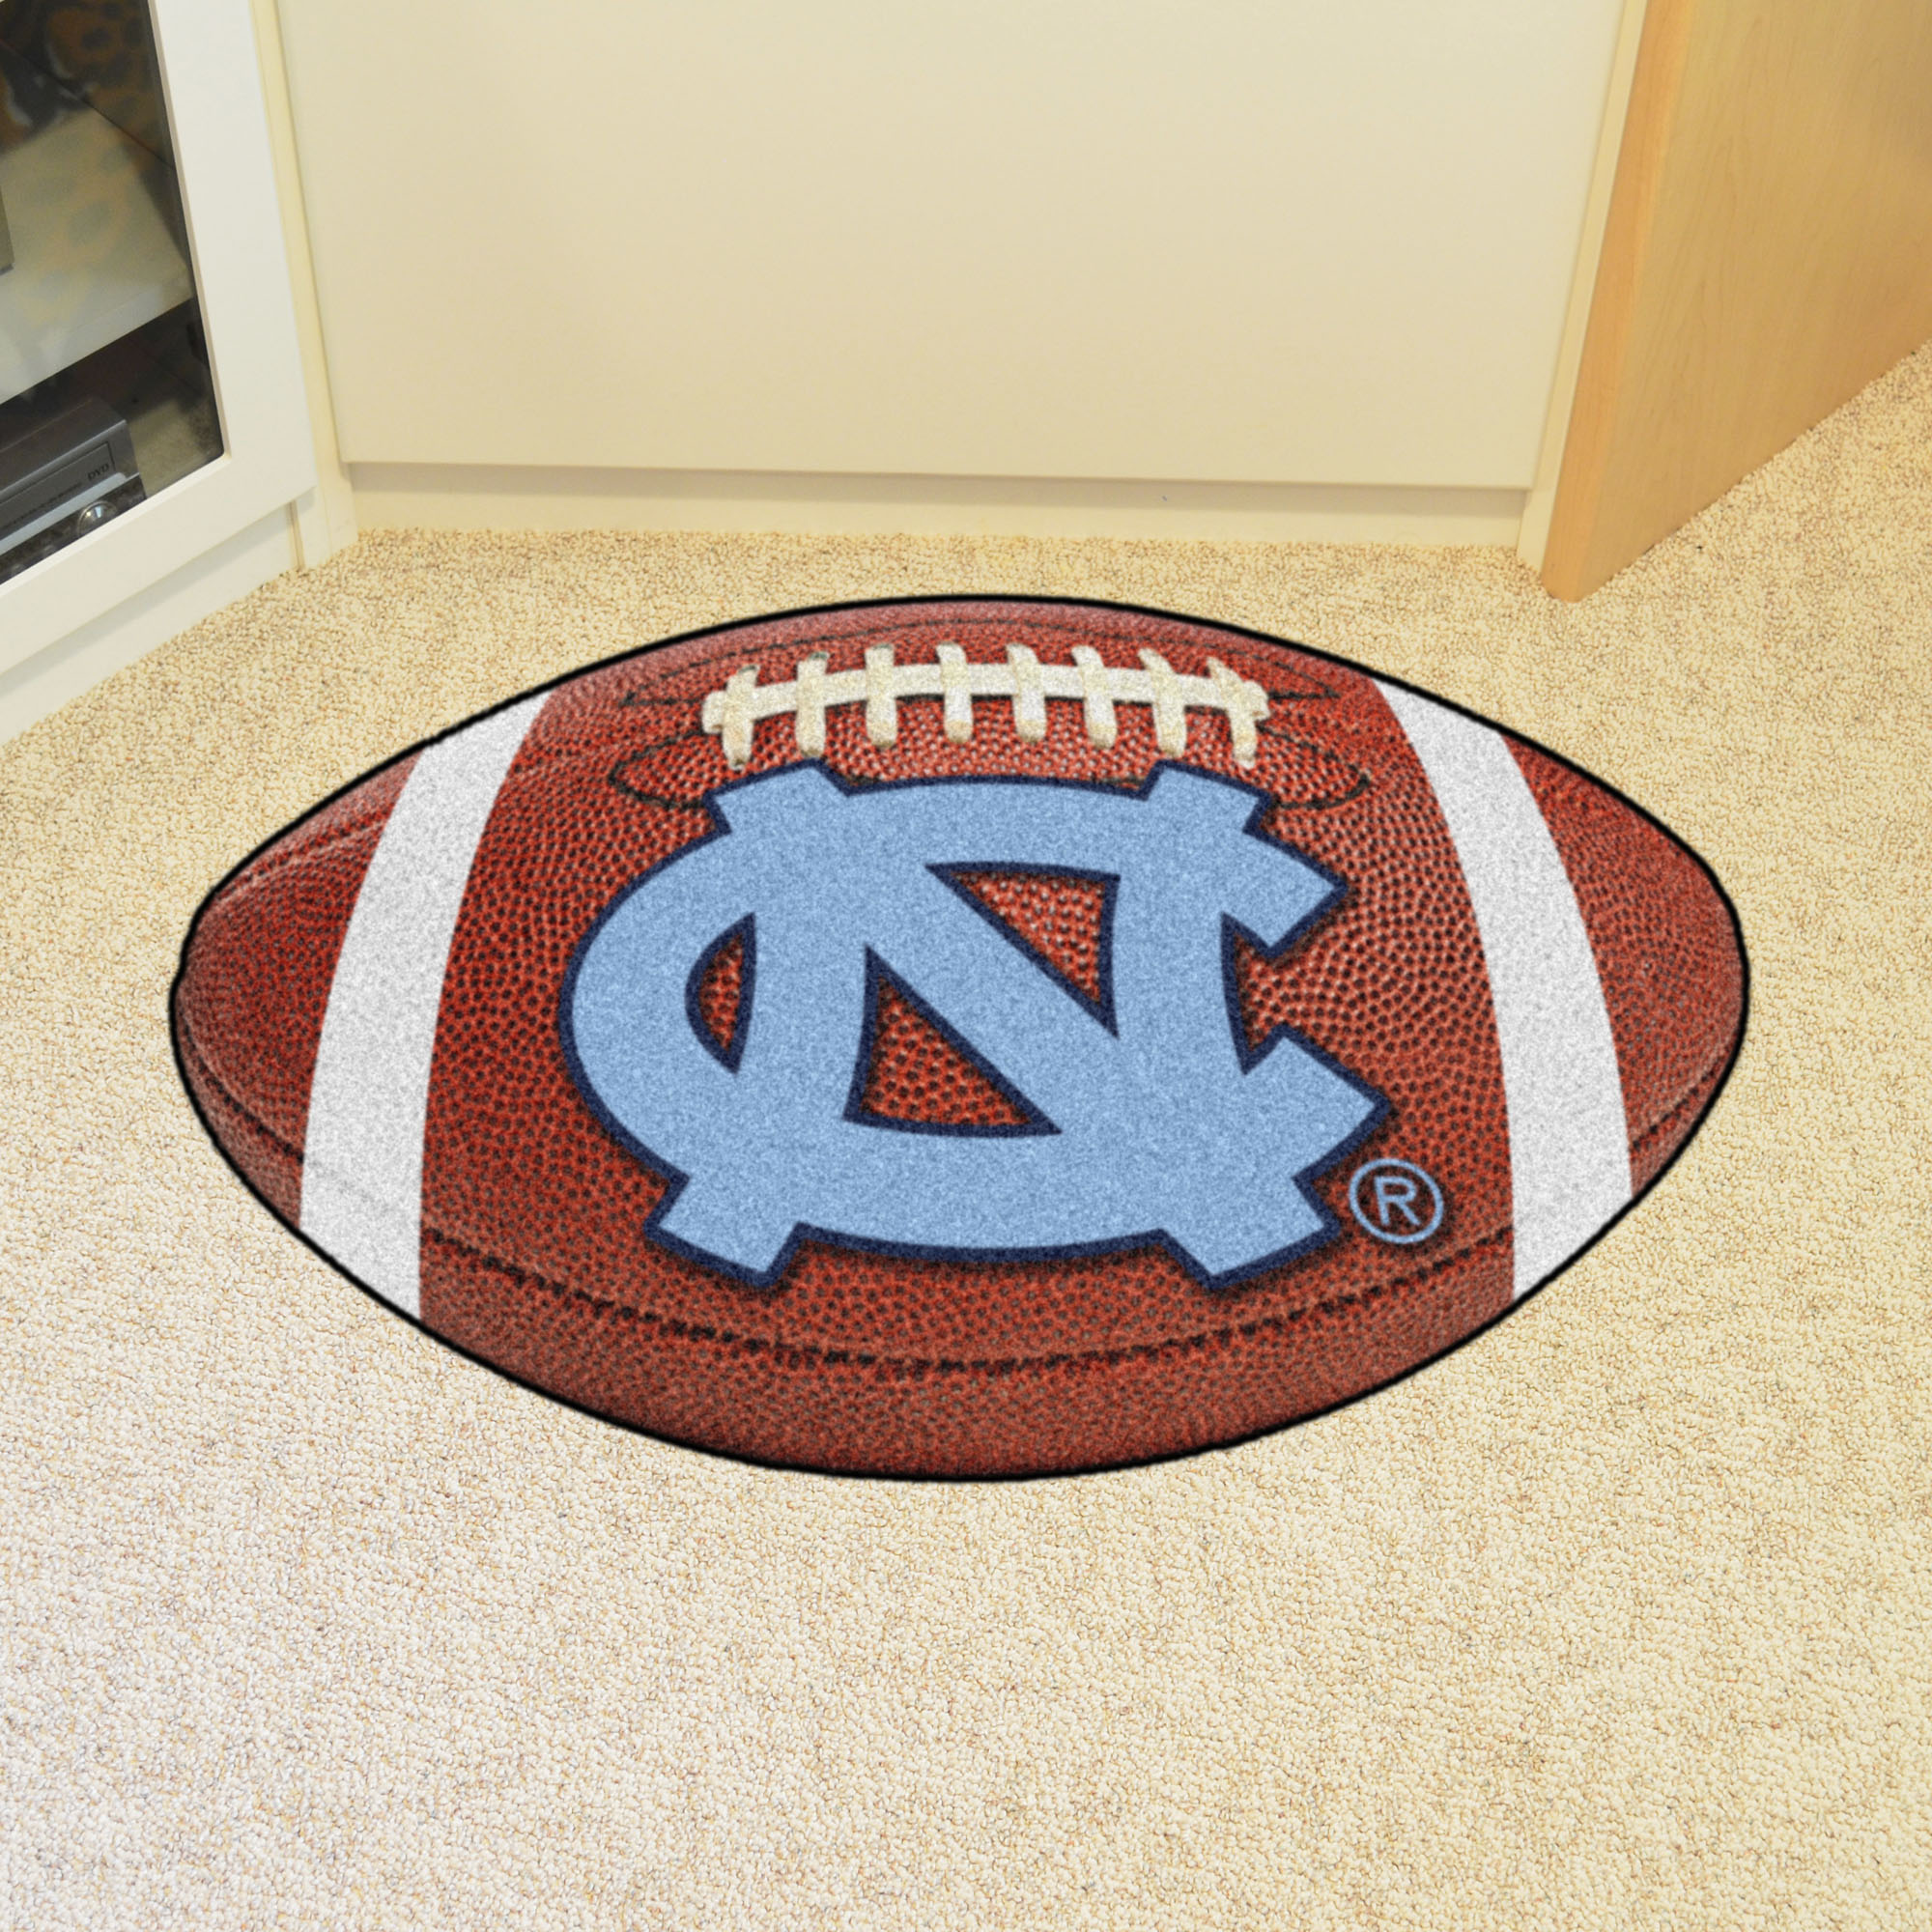 University of North Carolina Ball Shaped Area Rugs (Ball Shaped Area Rugs: Football)